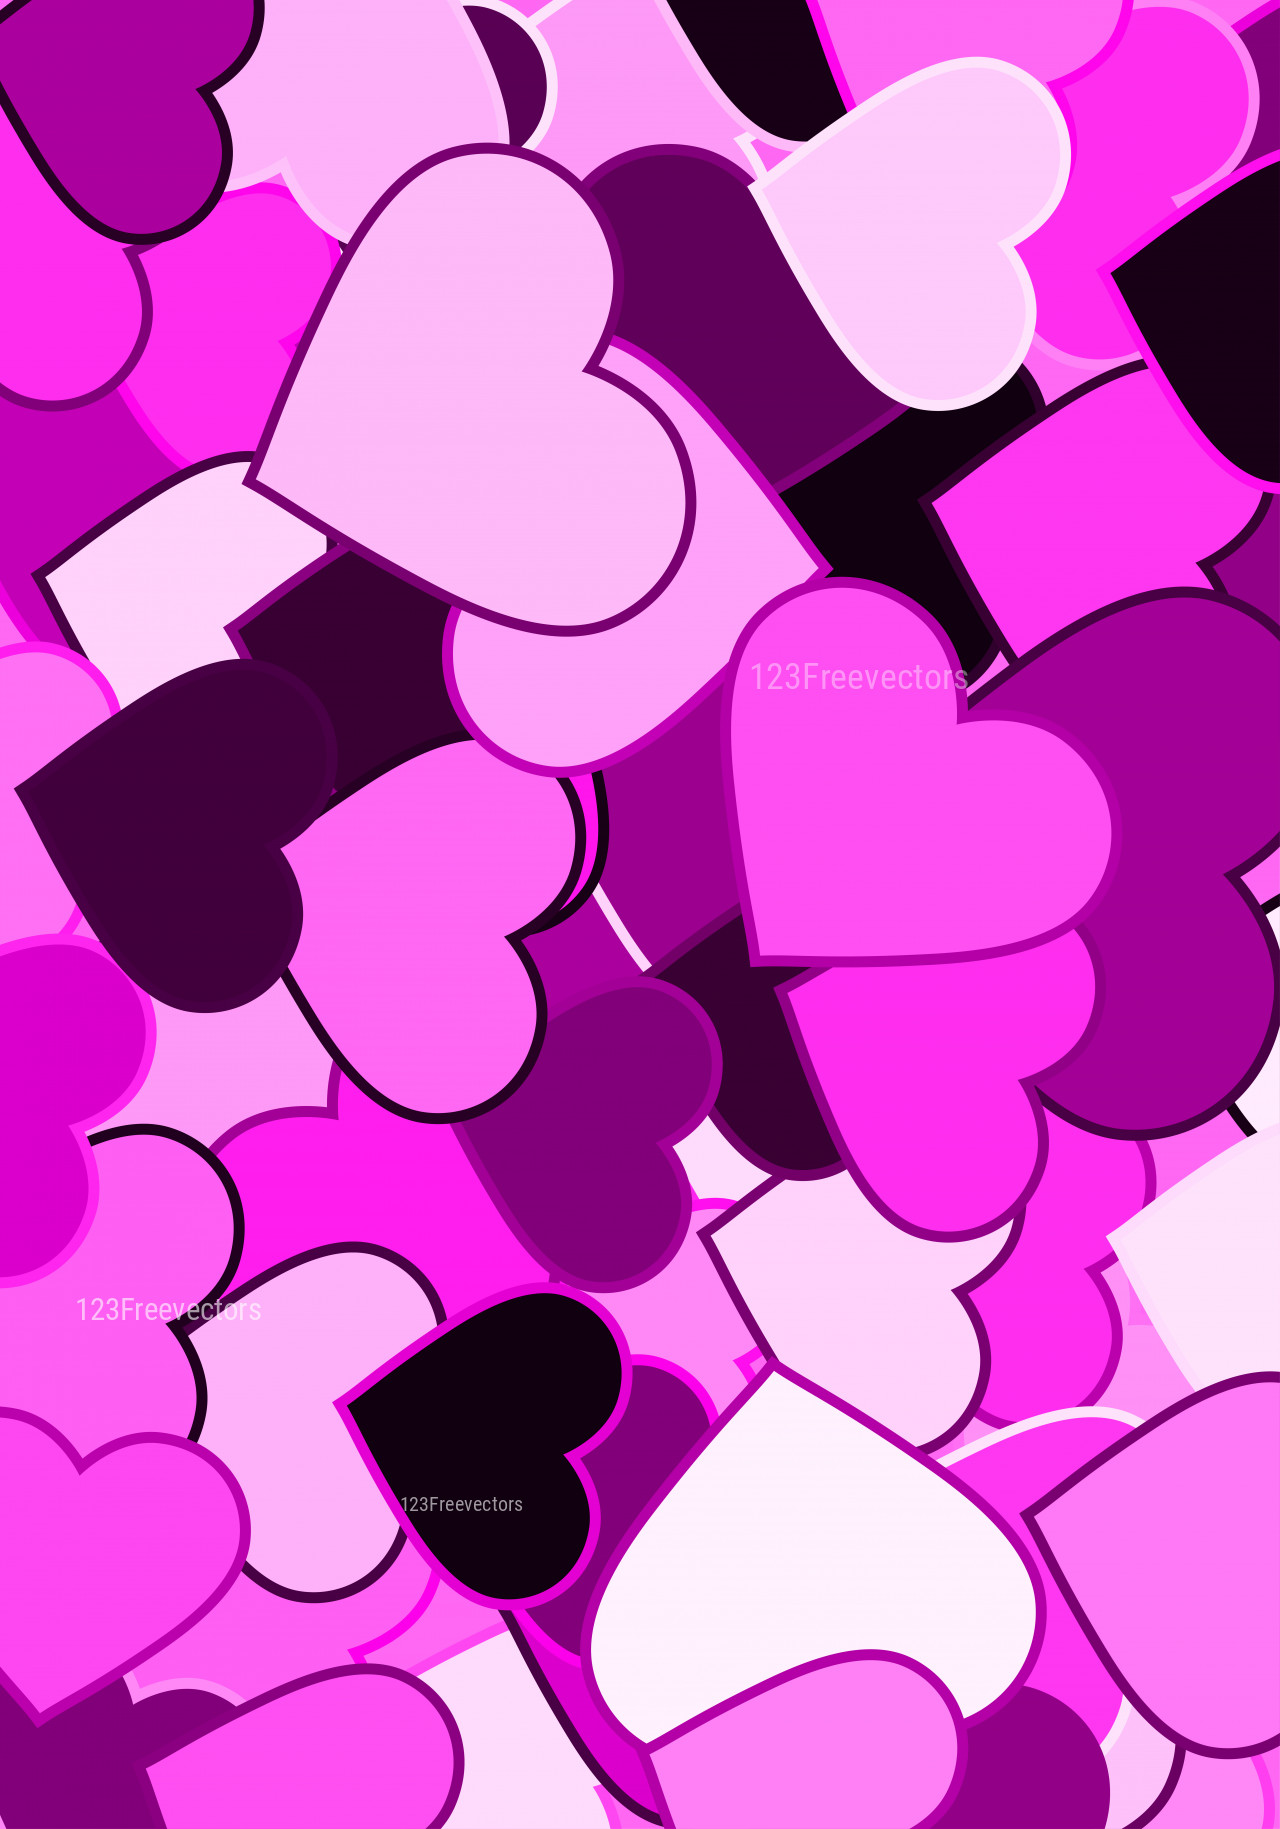 235543 Purple Heart Background Images Stock Photos  Vectors   Shutterstock